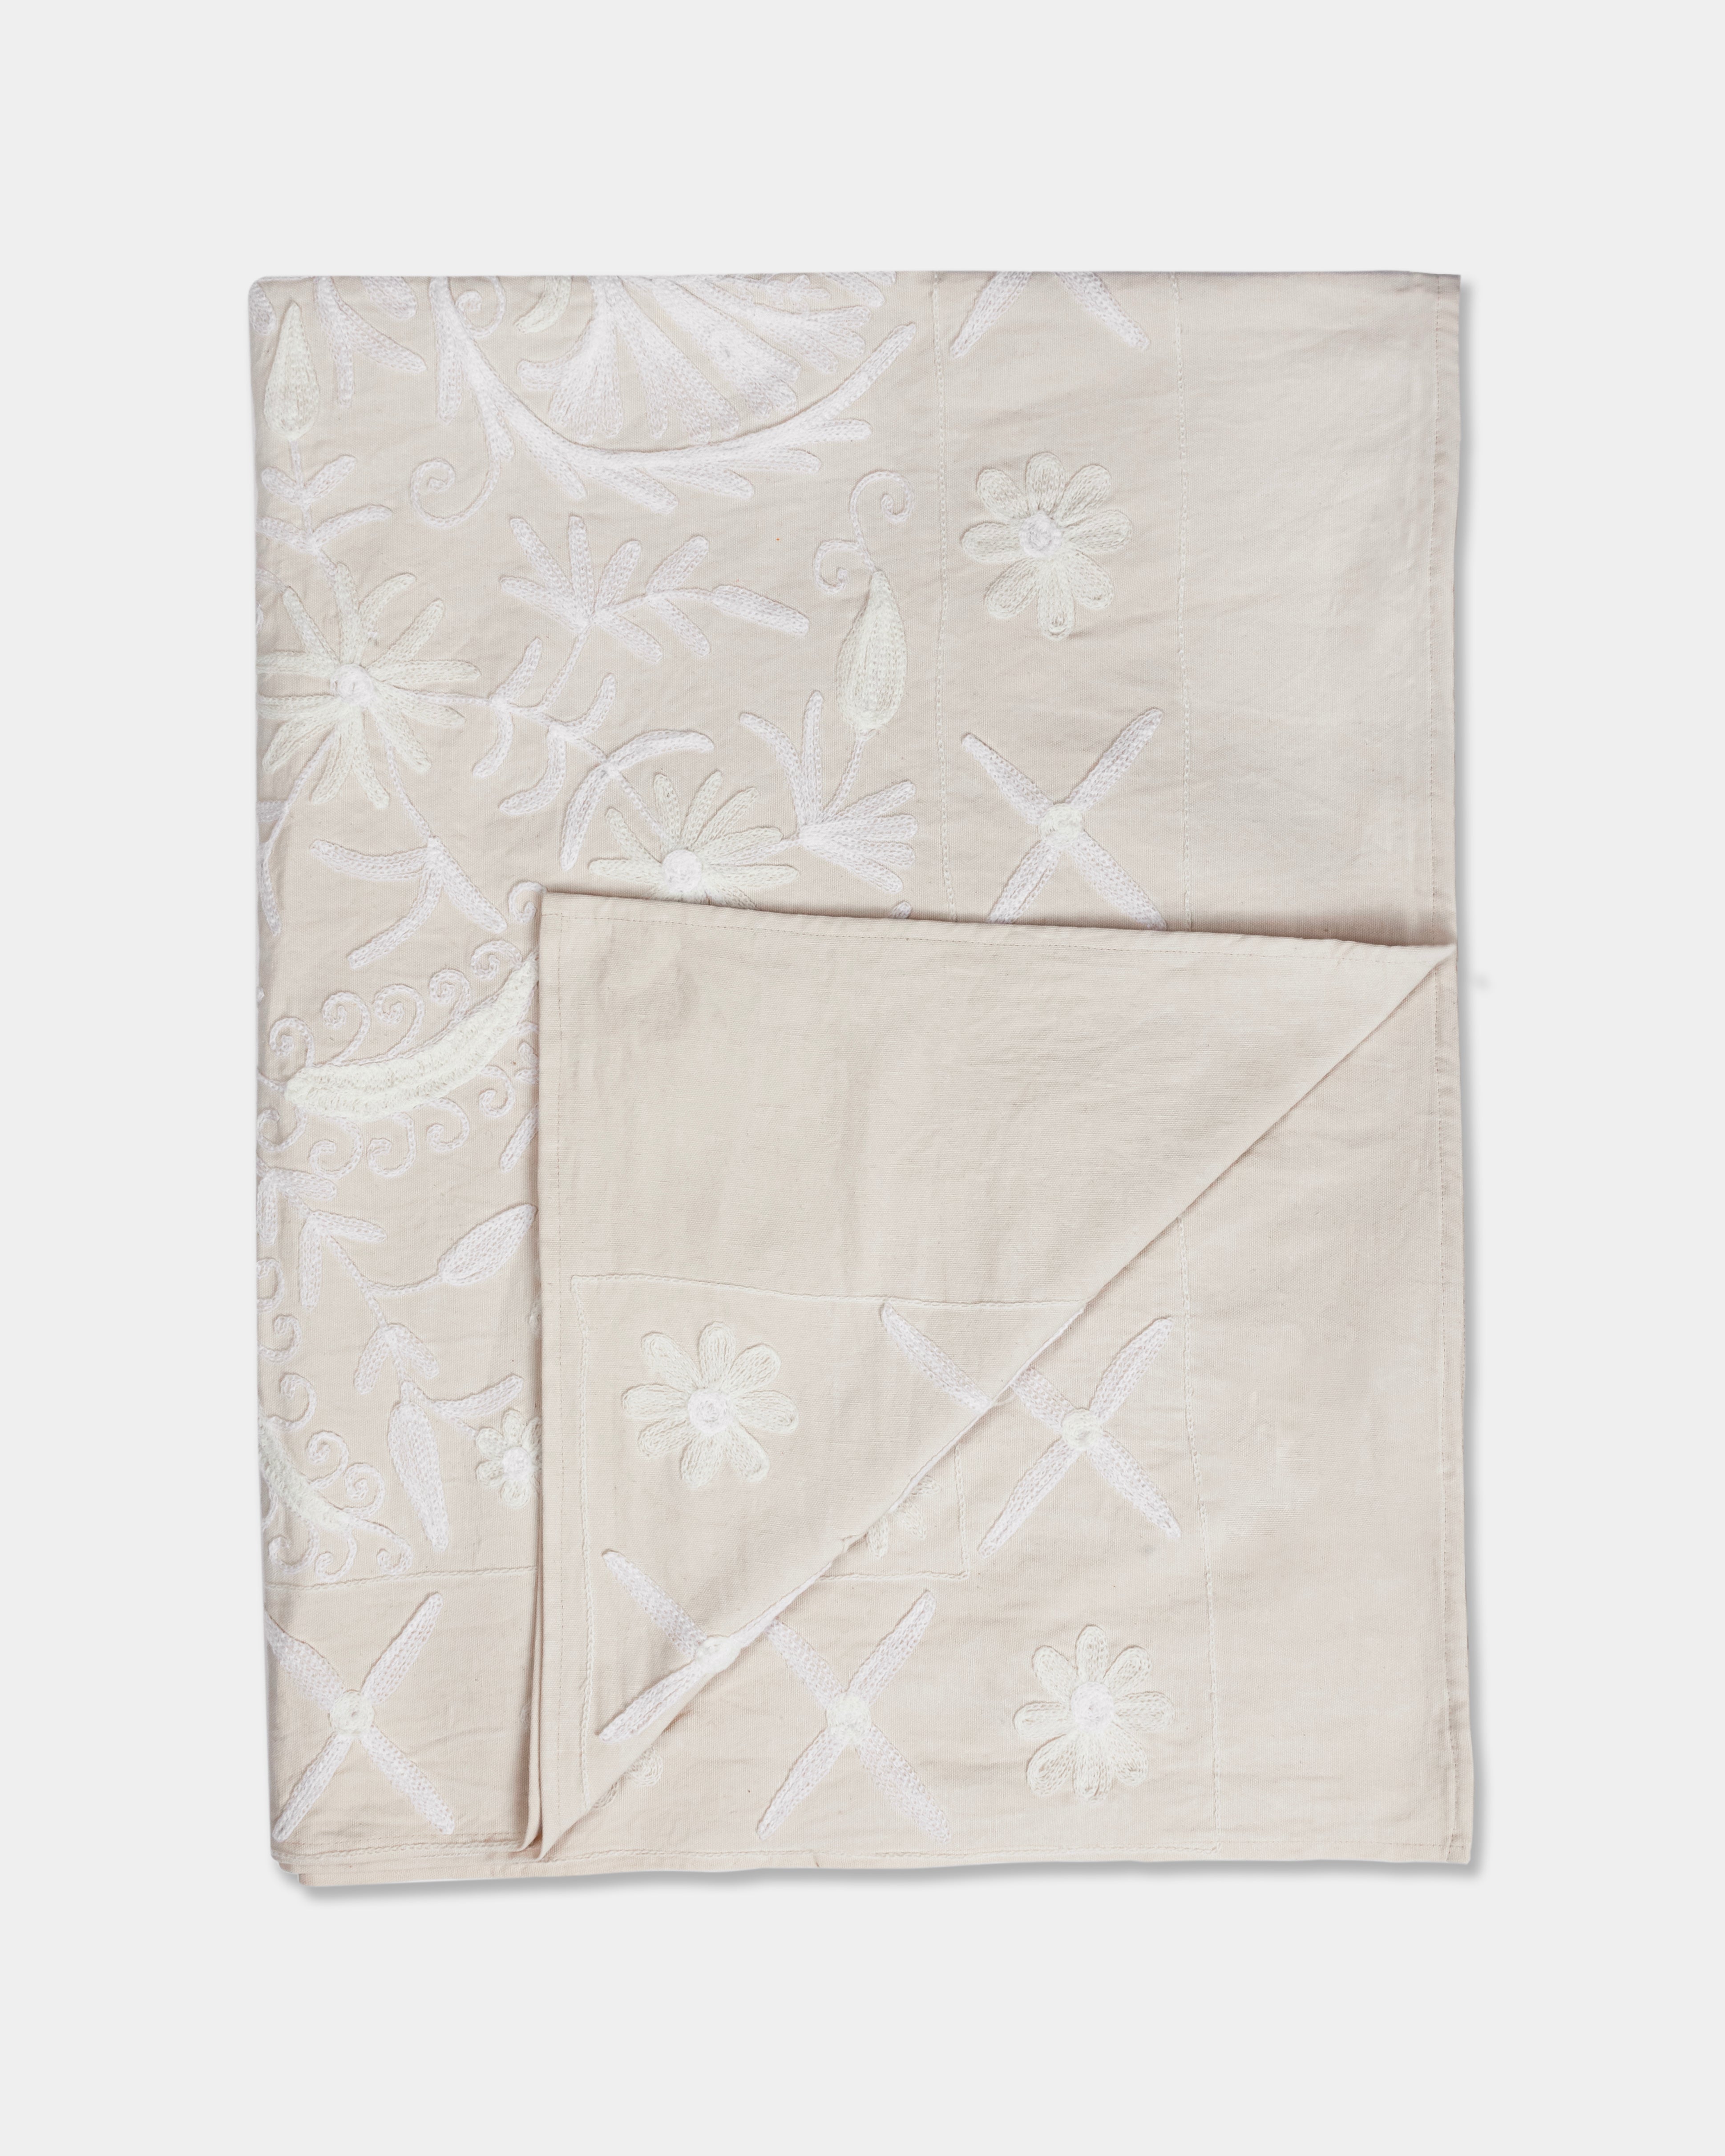 Suzani Throw | Ivory Tapestry Throw 60x90"